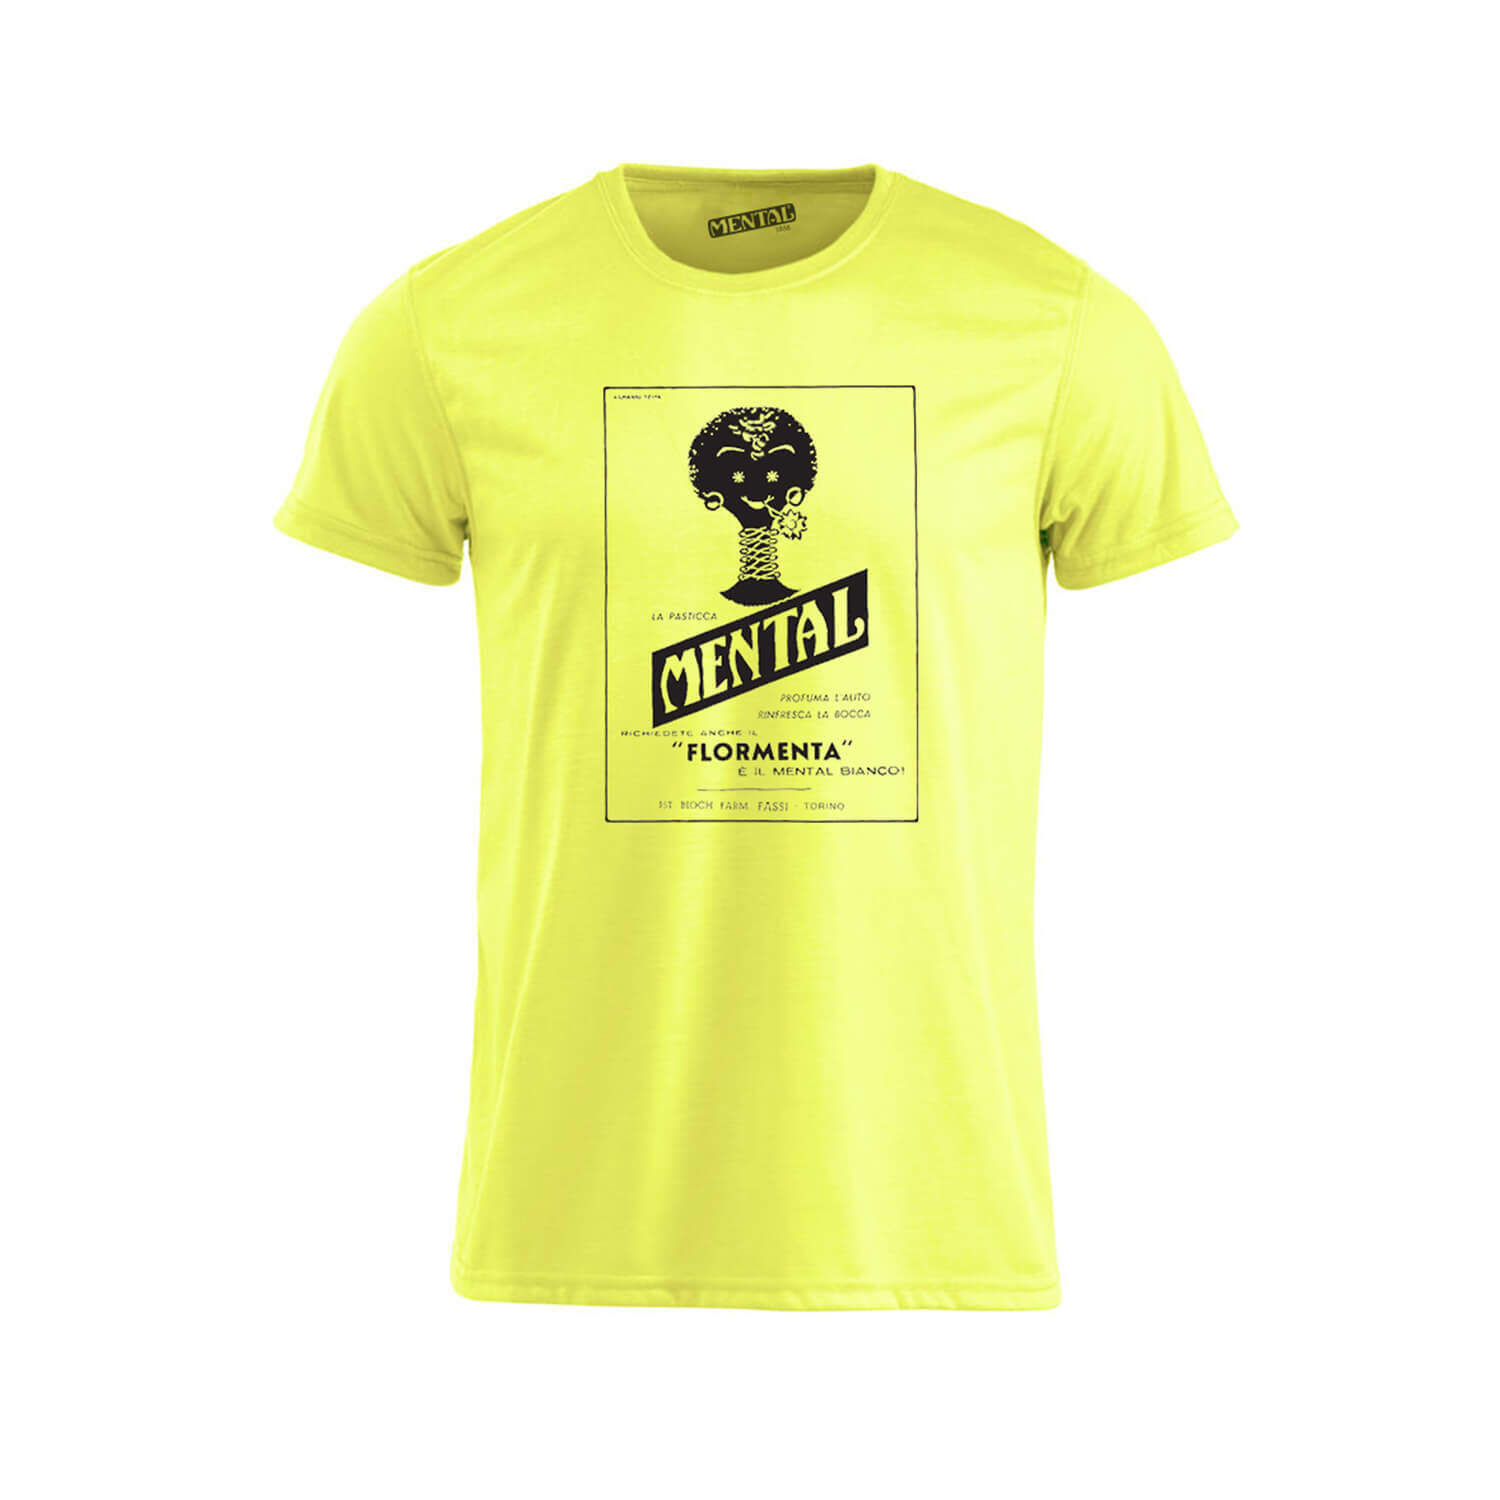 T-Shirt neon yellow Vintage Mental - size M - T-shirt